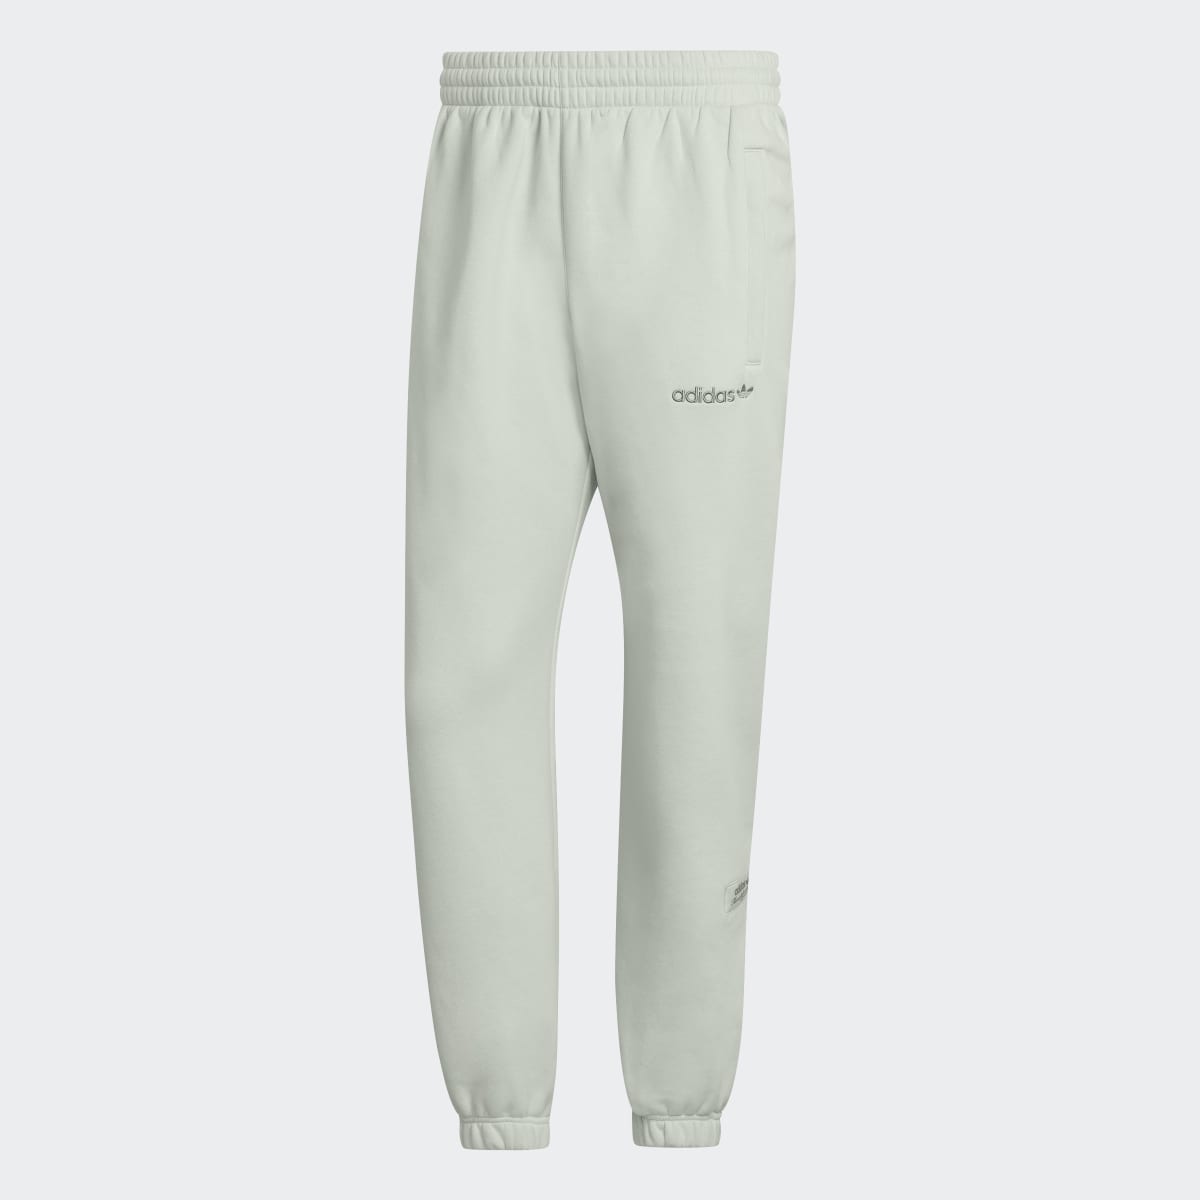 Adidas Trefoil Linear Sweat Pants. 5